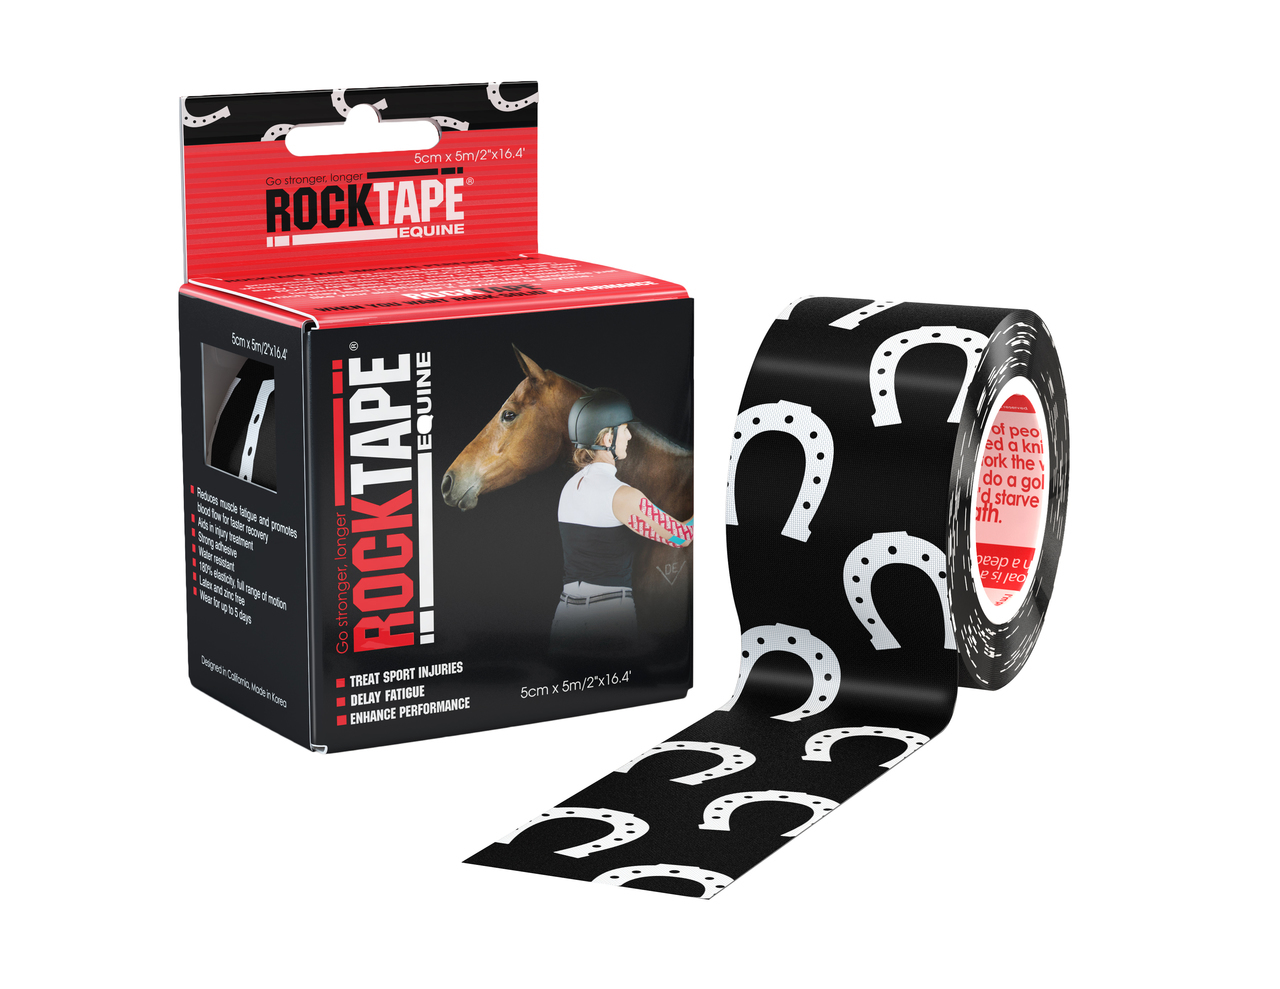 RockTape Kinesiology Tape 2 x 16' (5cm x 5m) Single Rolls